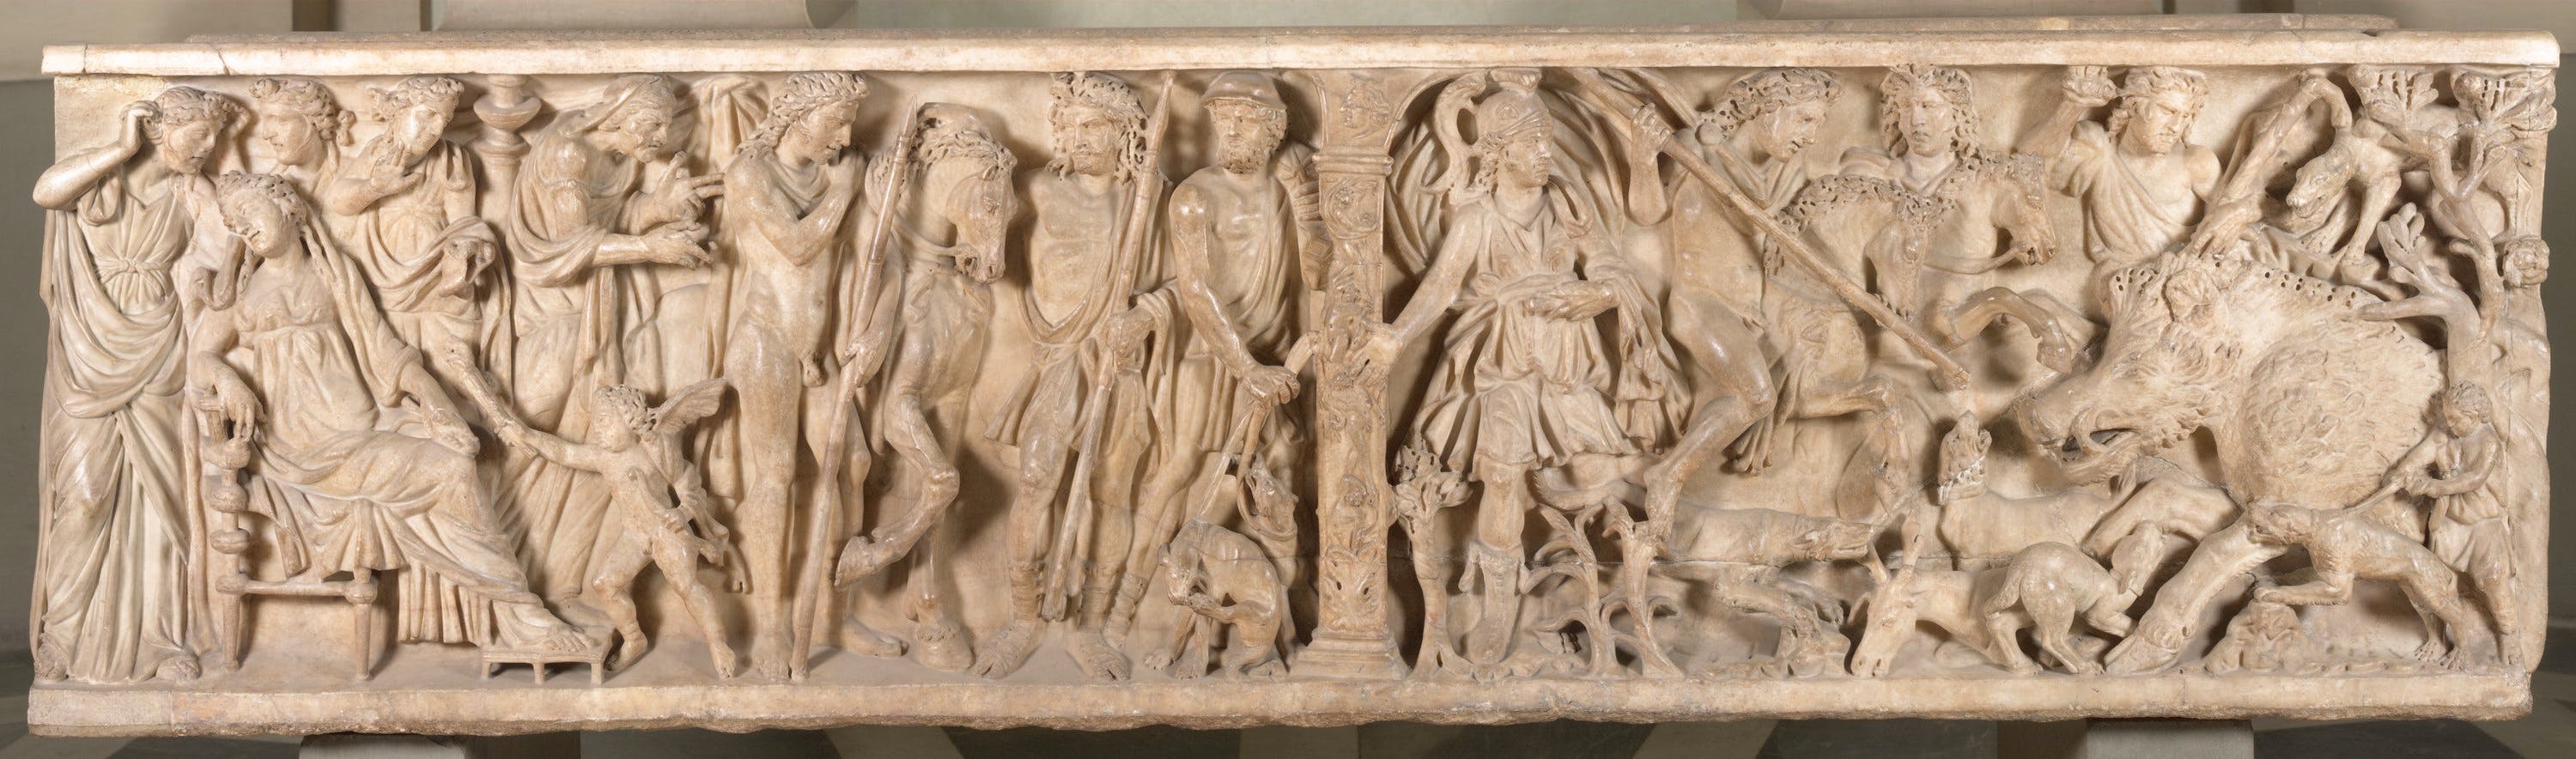 Sarcophagus depicting the myth of Phaedra and Hippolytus